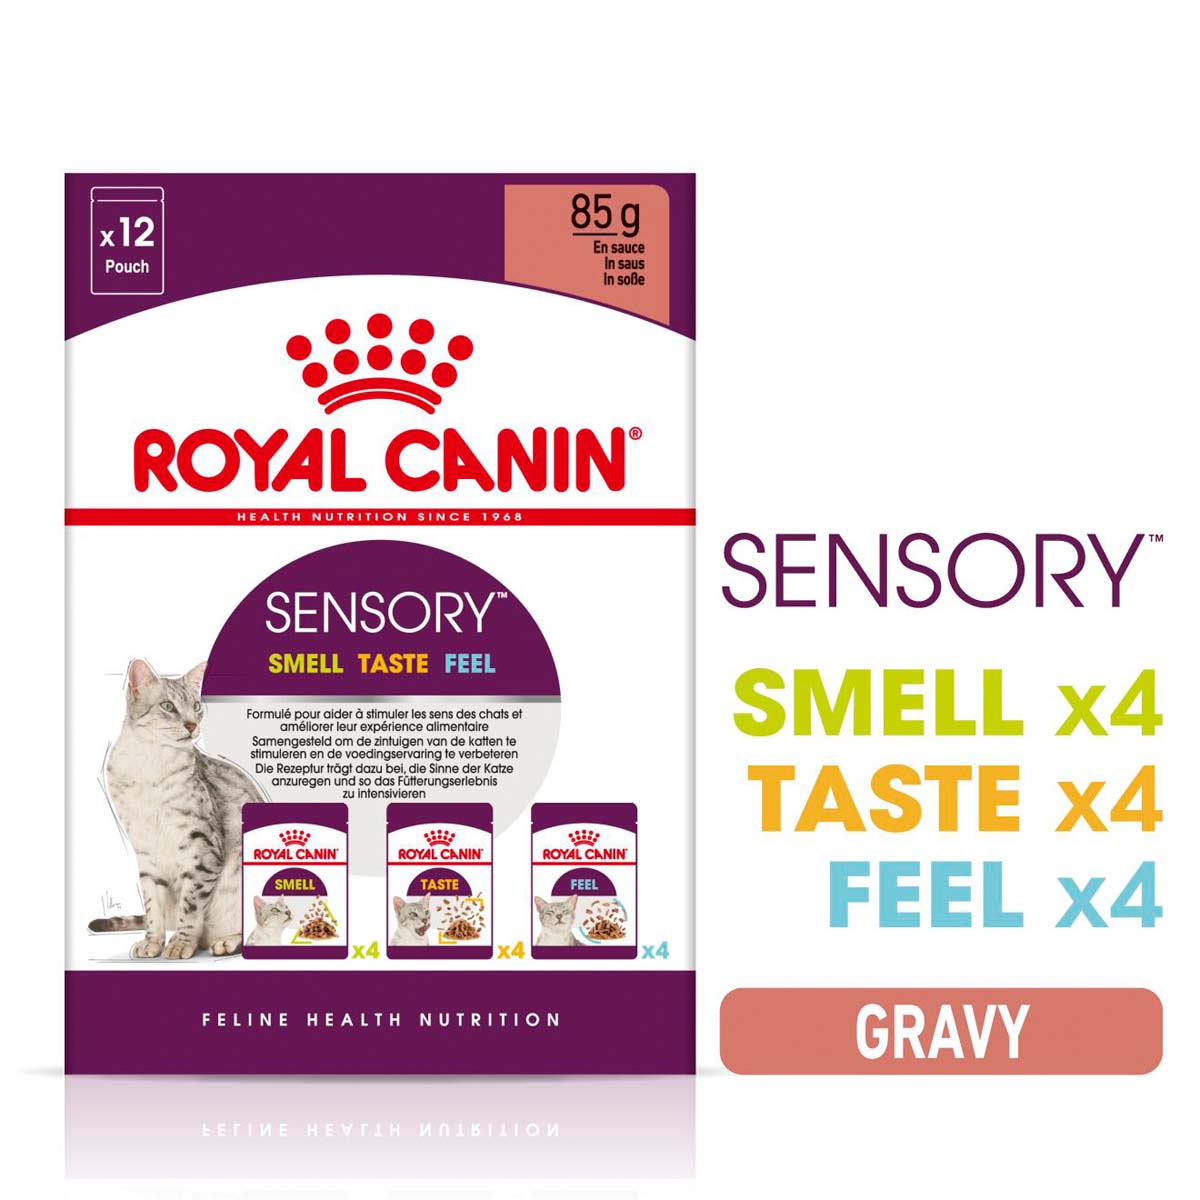 Royal Canin Sensory Multipack Gravy 12x85g von Royal Canin